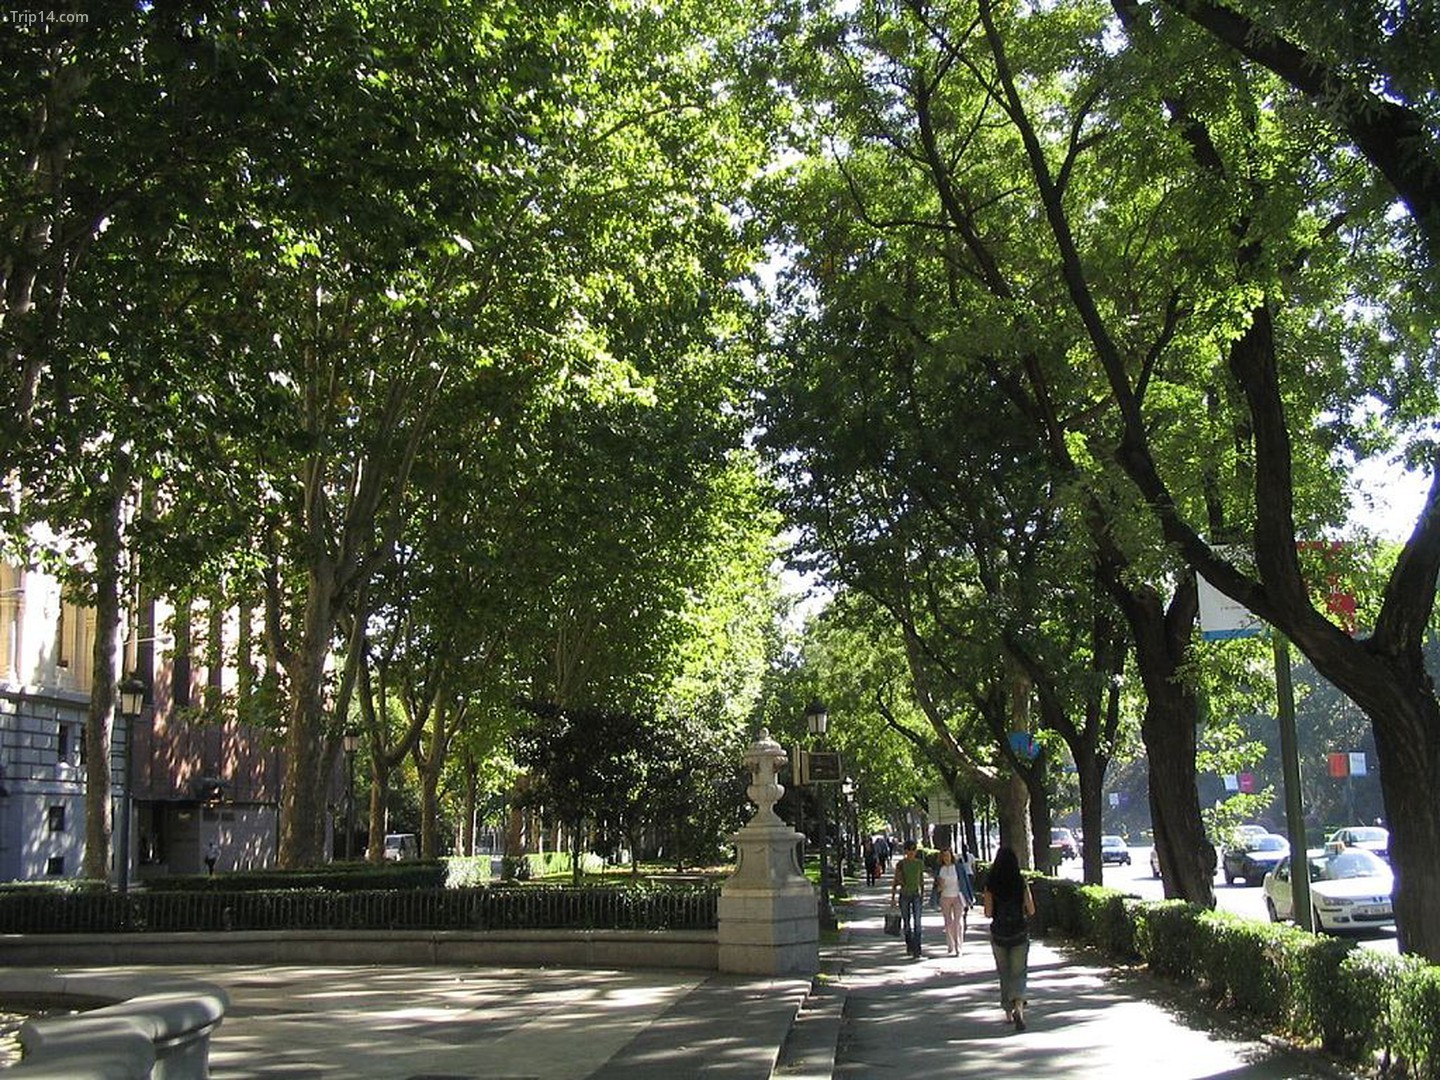 Paseo del Prado